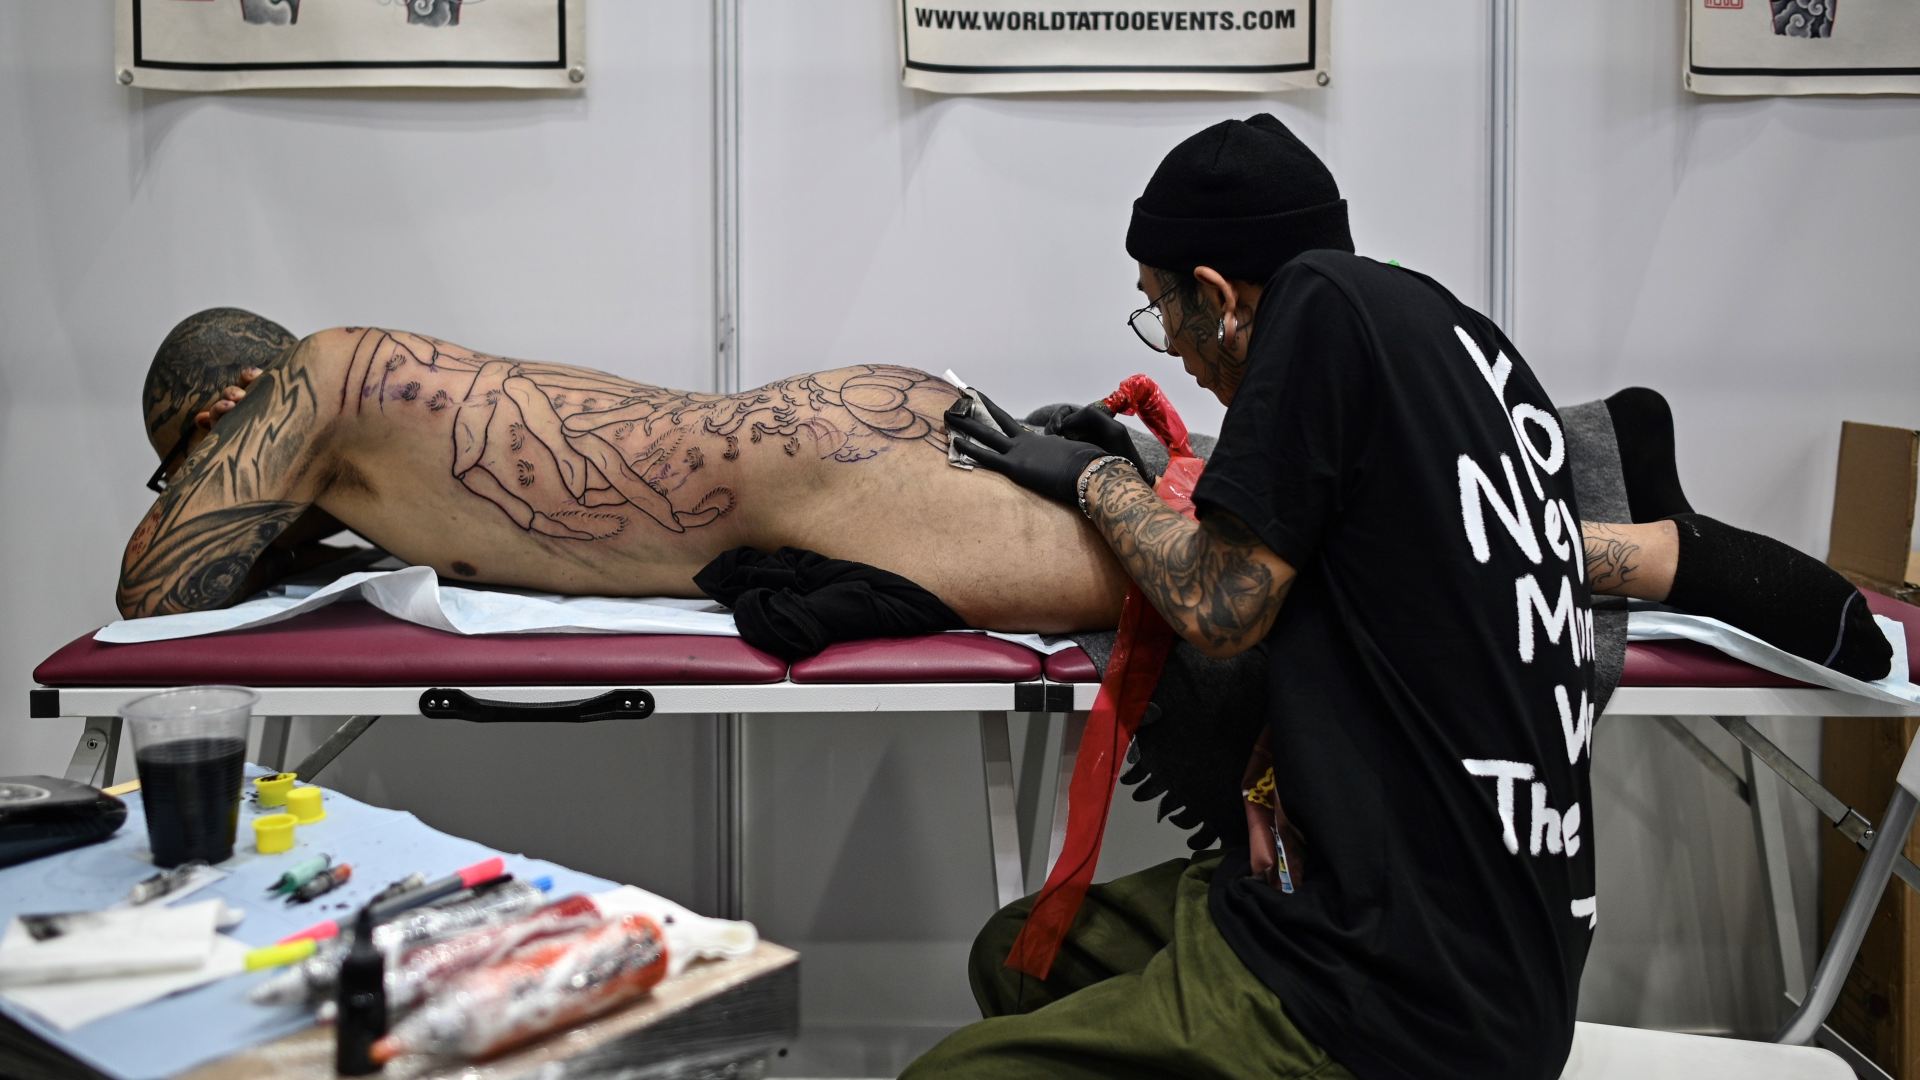 Un ministro de Malasia critica el espectáculo de tatuajes como "obsceno" 2